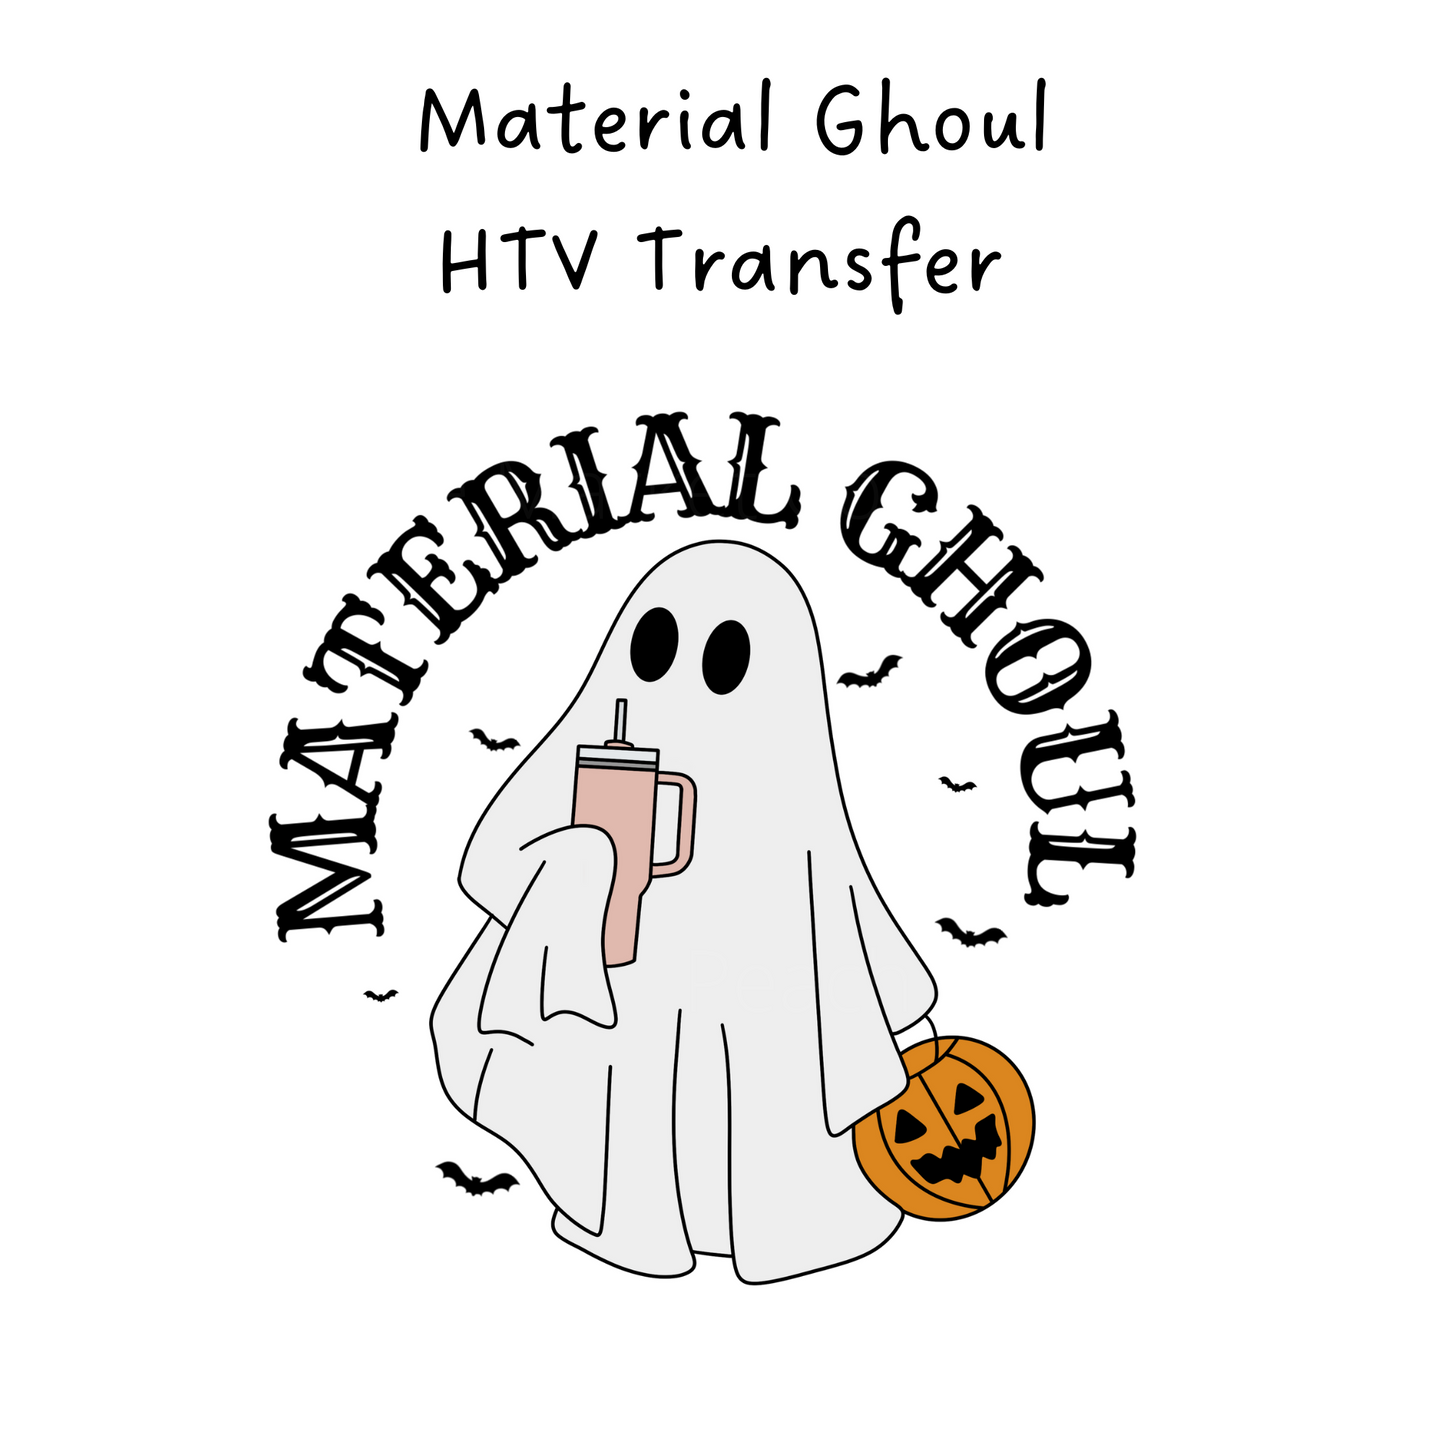 Material ghoul HTV Transfer